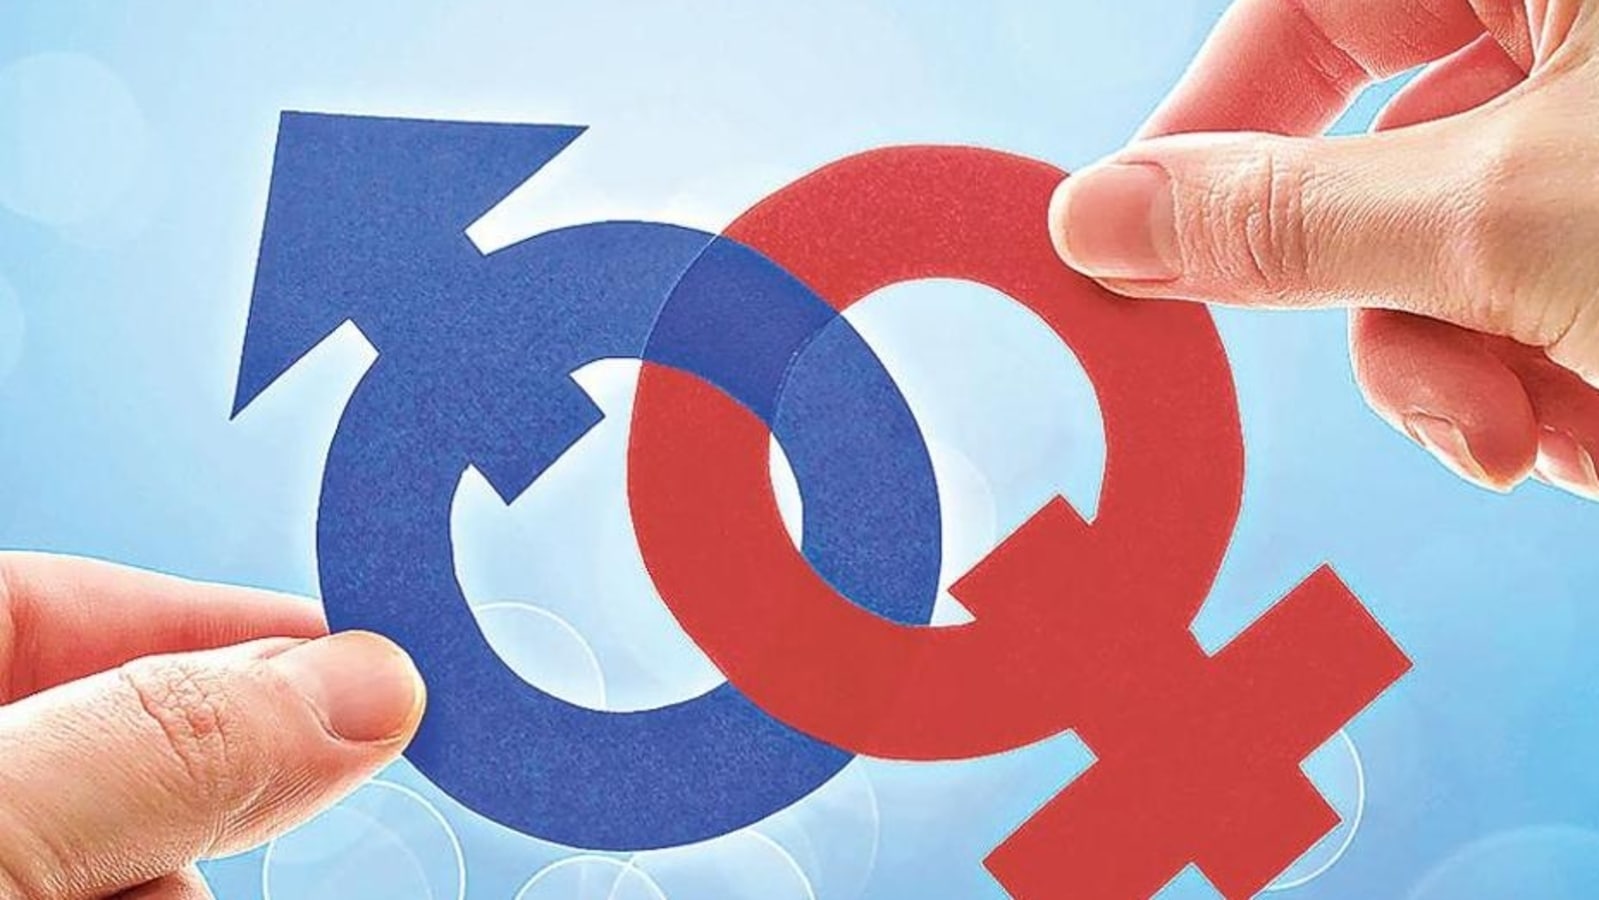 98 Of Employment Gap Between Men And Women Due To Gender Discrimination Report Latest News